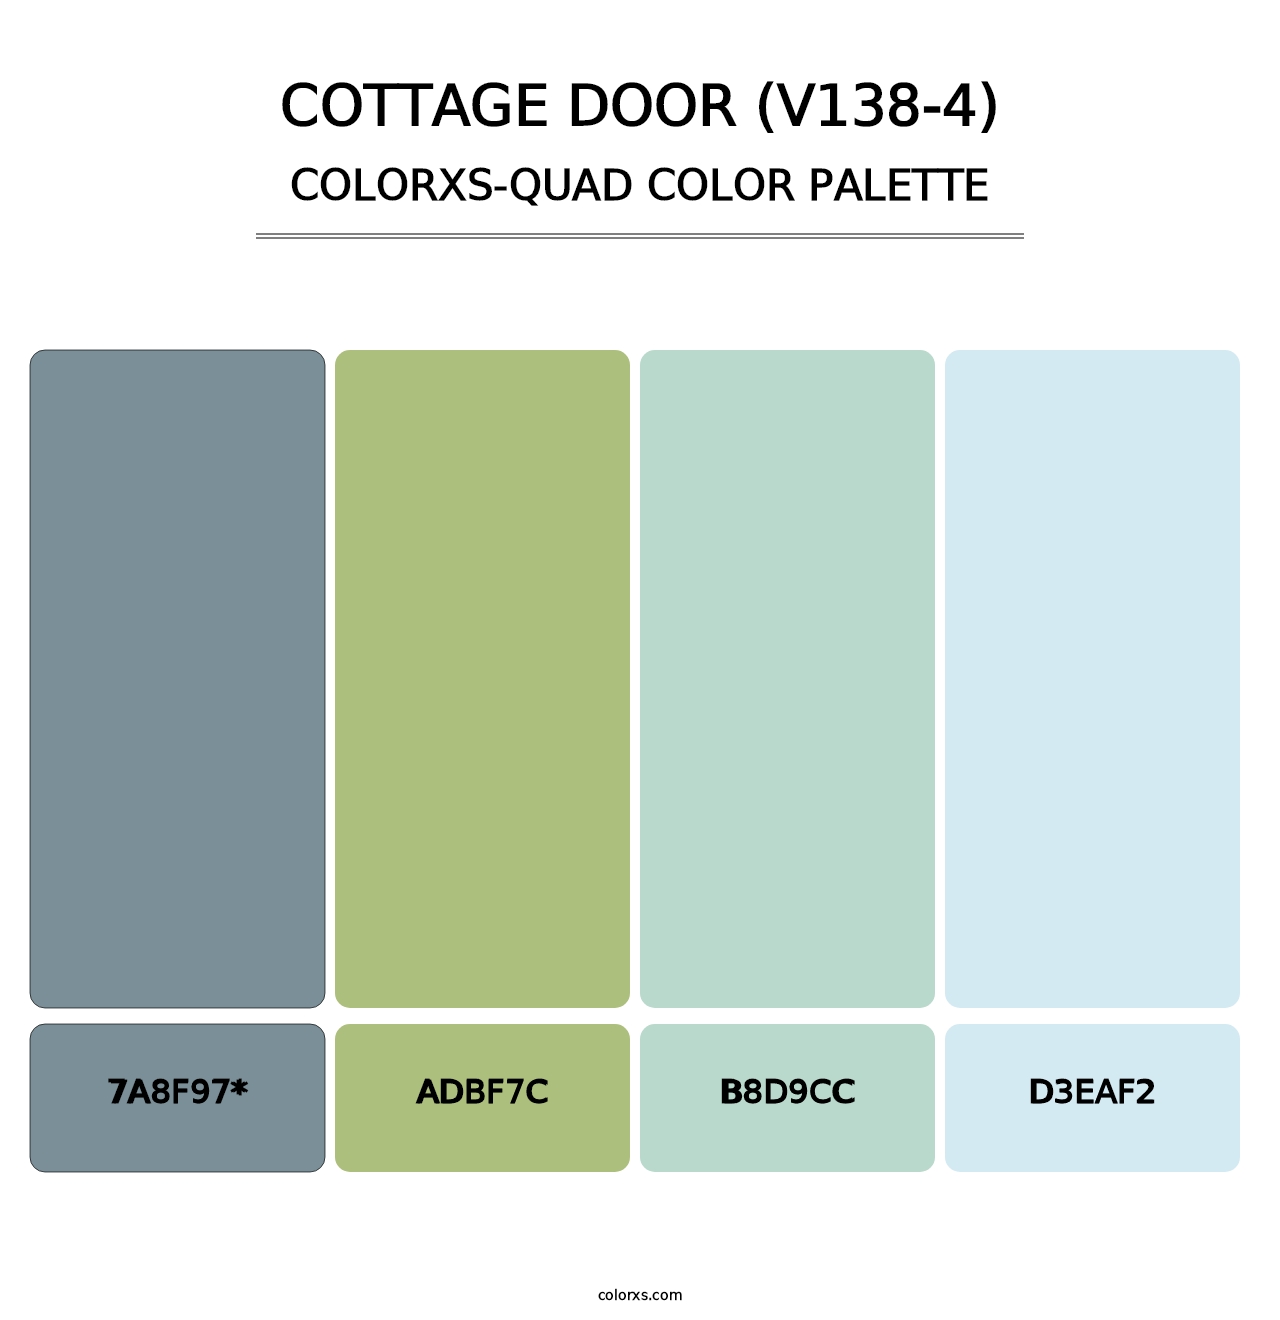 Cottage Door (V138-4) - Colorxs Quad Palette